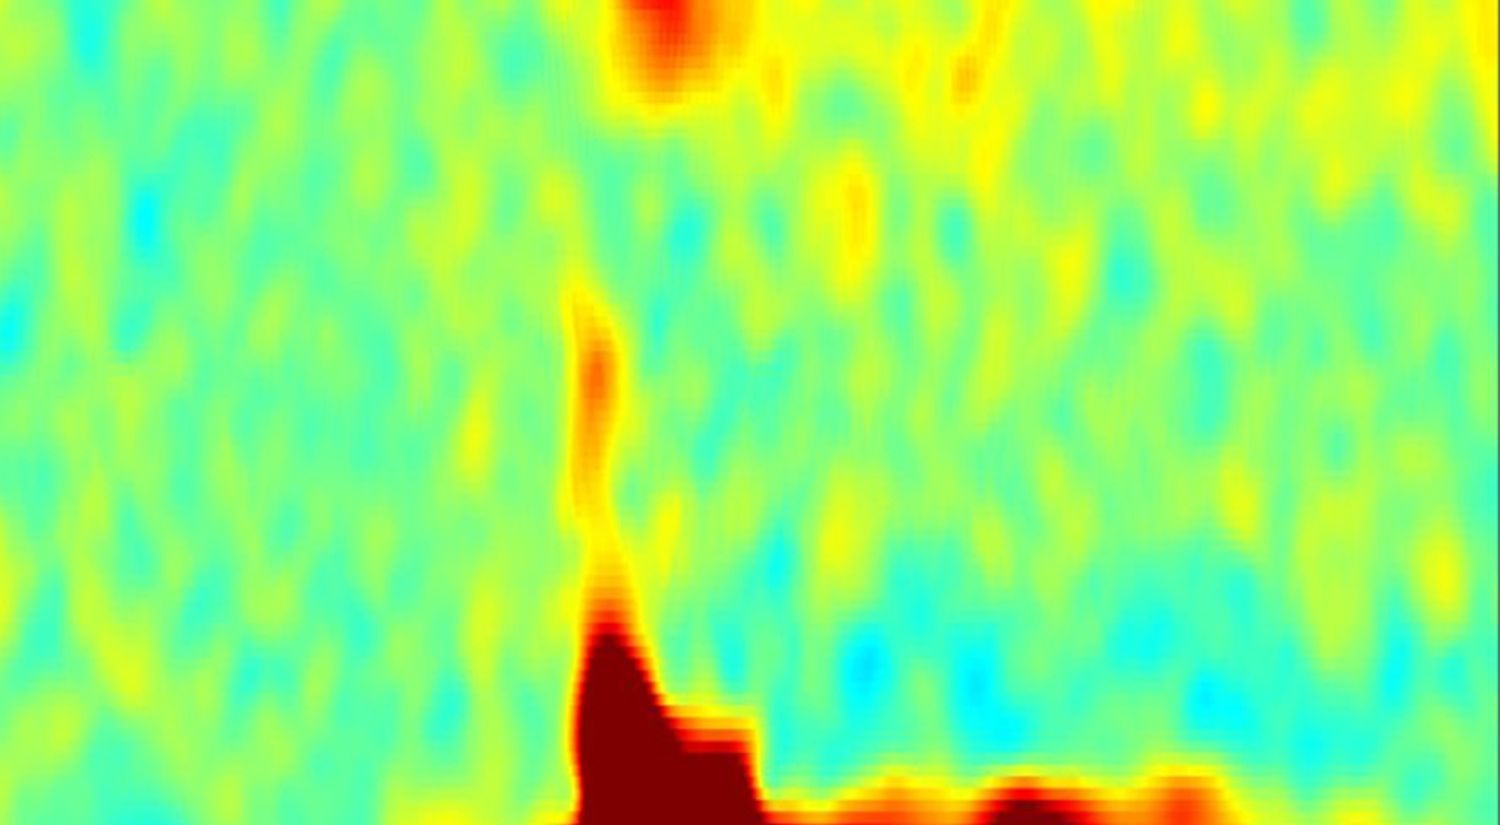 An example of a gamma oscillation 